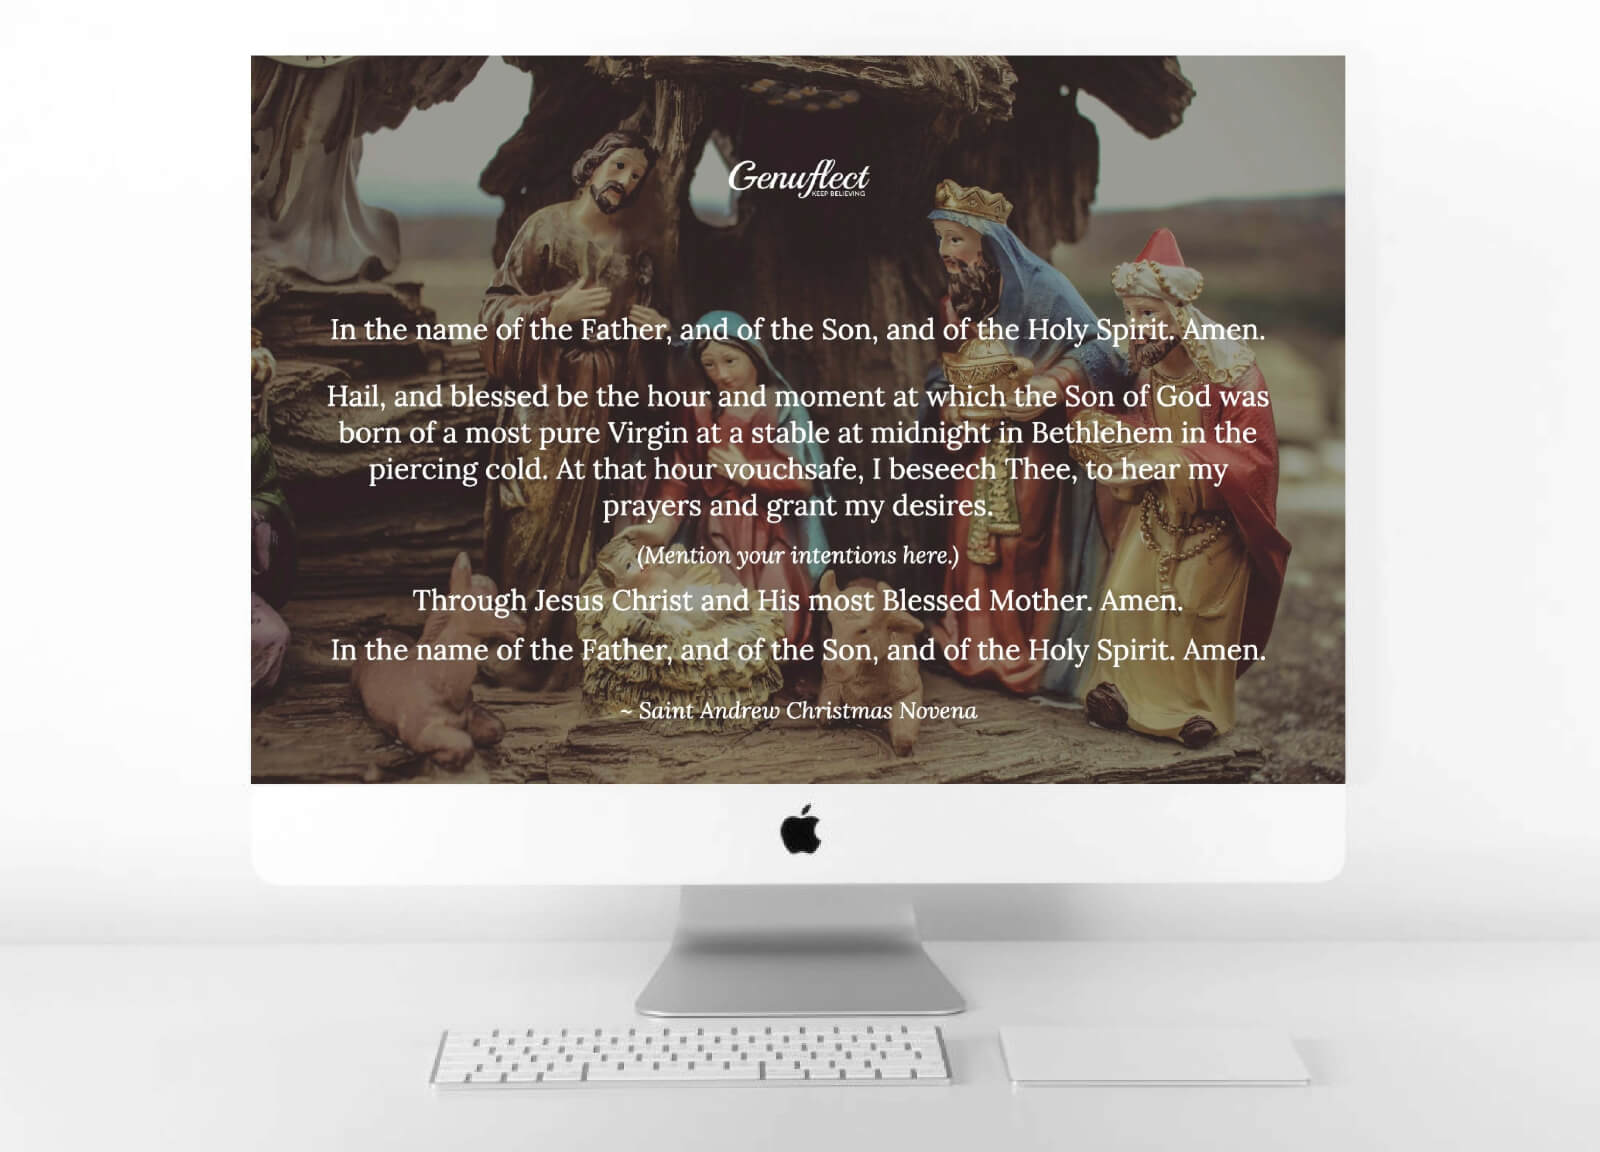 Genuflect computer background image of a Nativity scene